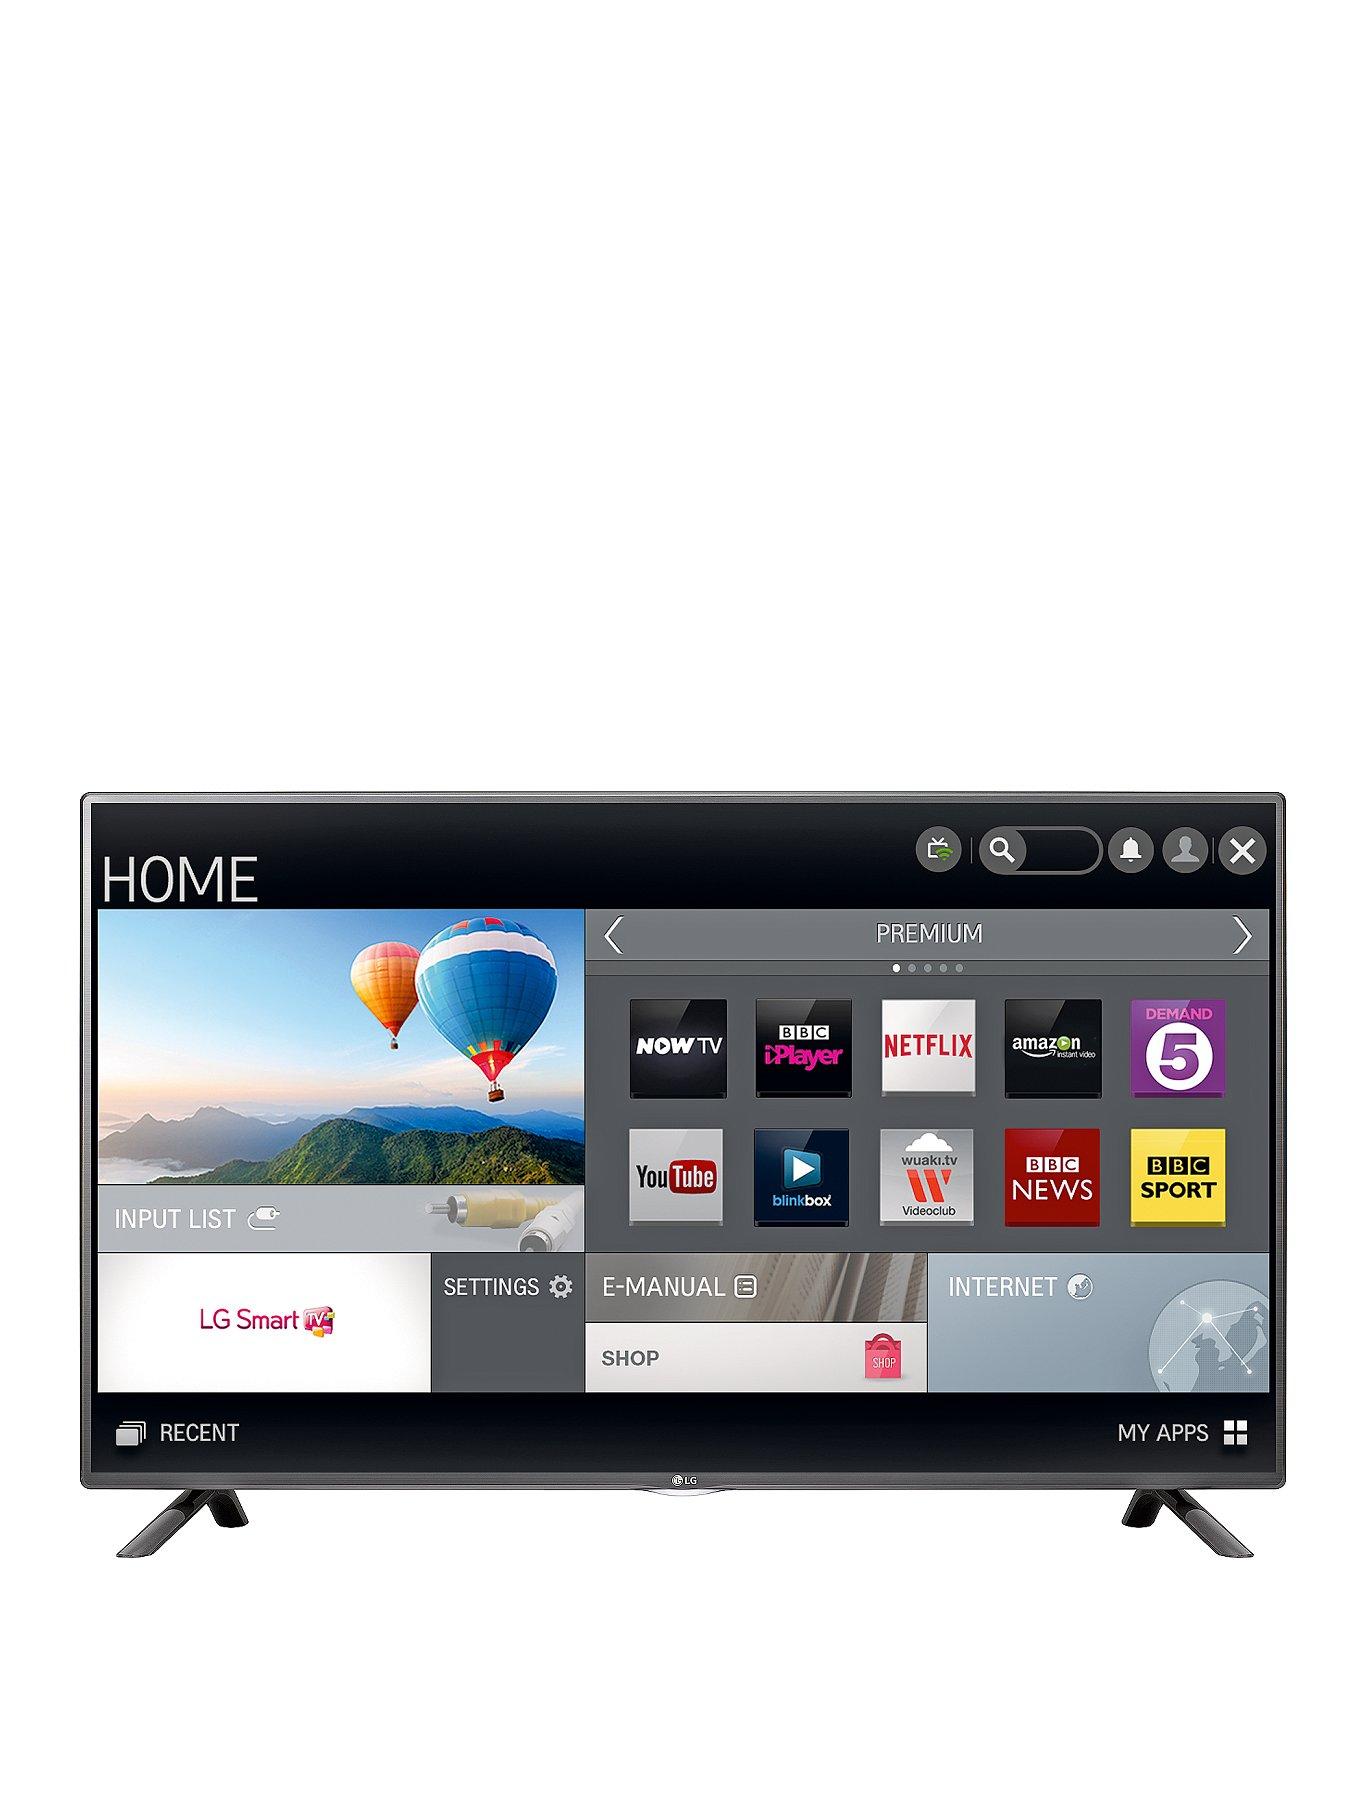 Cheap Led Tv Deals. TCL 32S325 32 Inch 720p Roku Smart LED TV (2019).